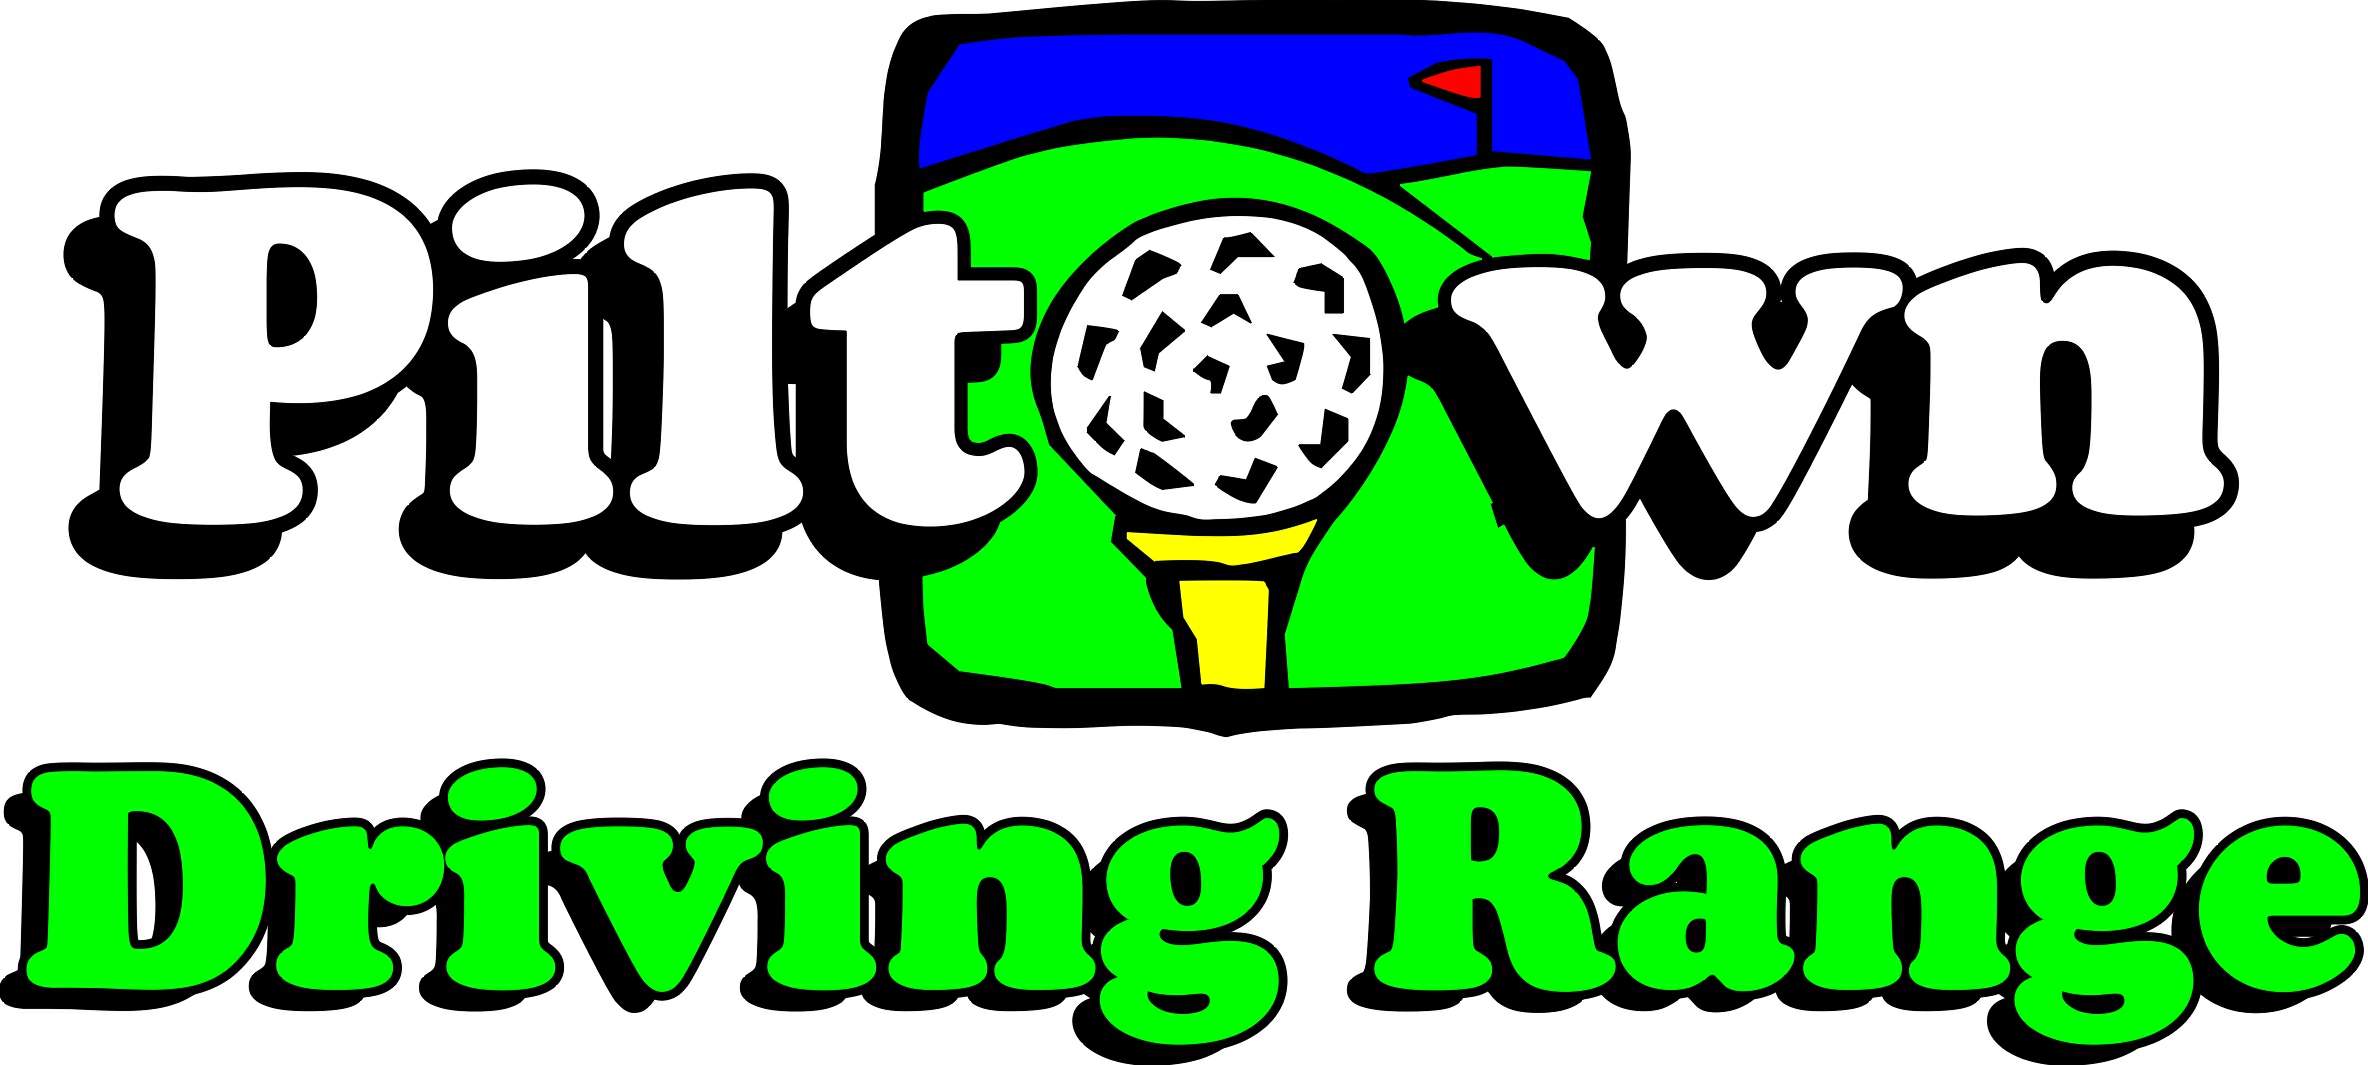 Piltown Golf Driving Range Drogheda Ireland